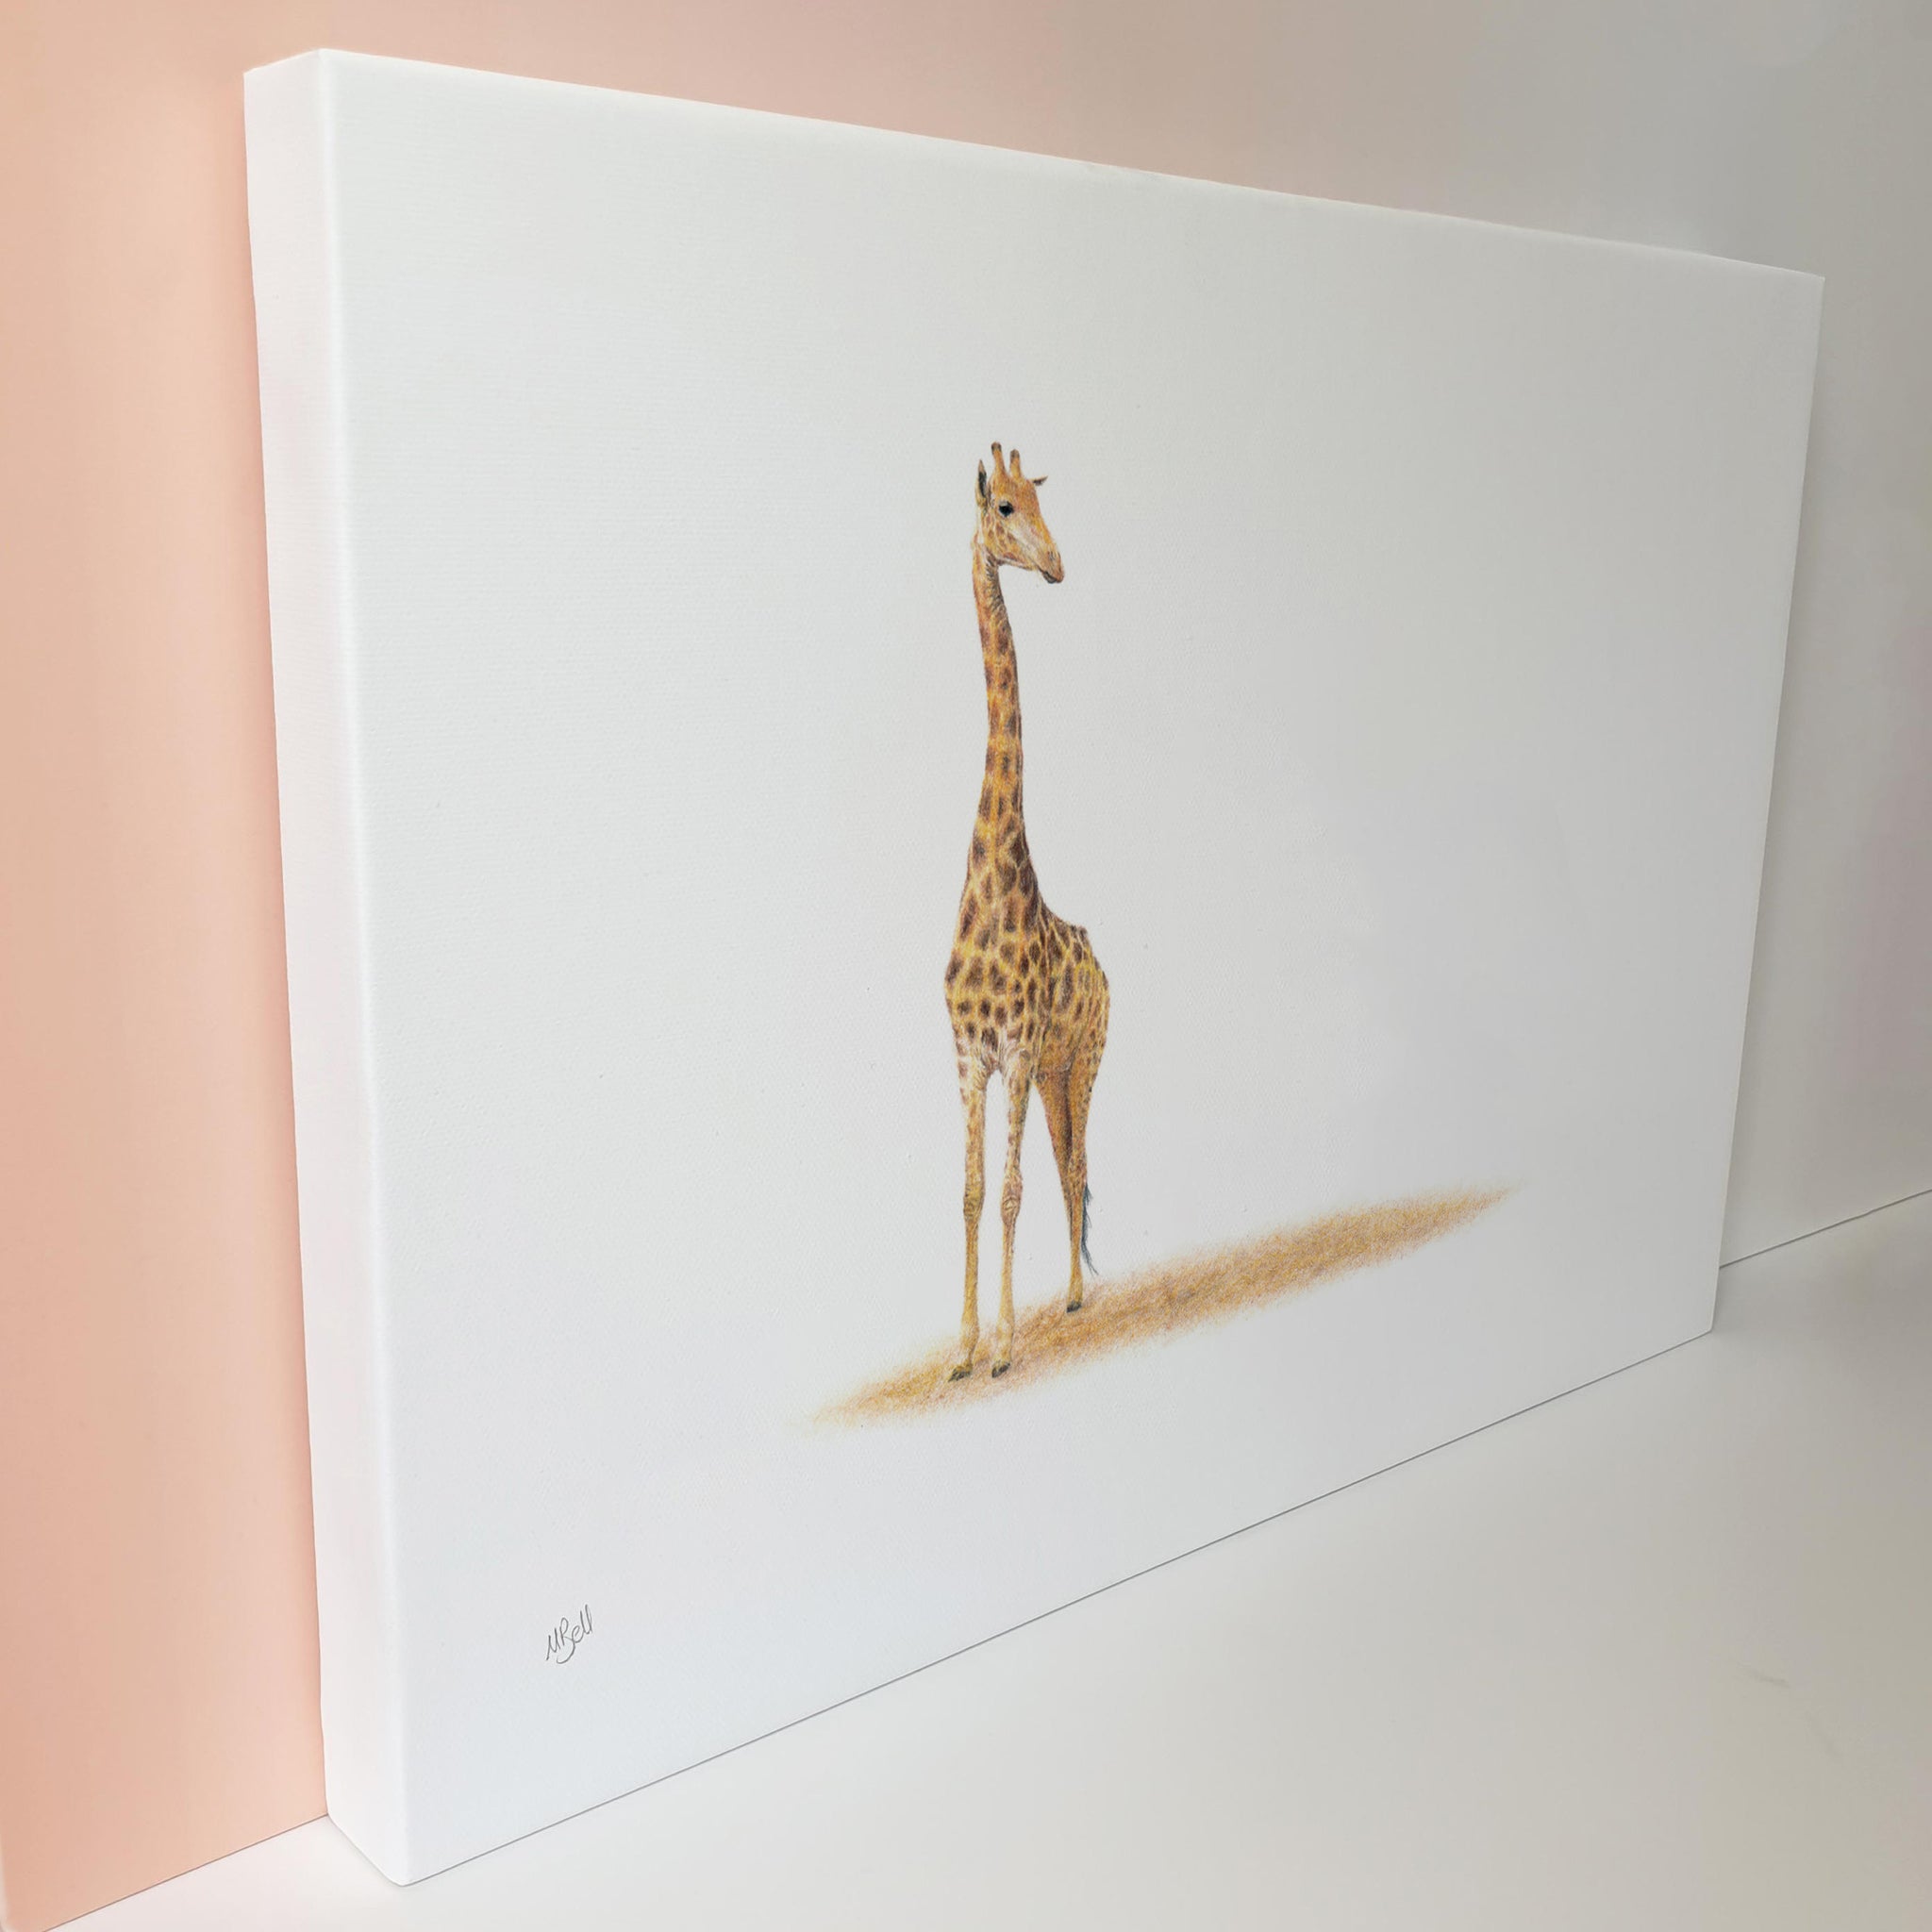 Giraffe wildlife art on canvas print artwork